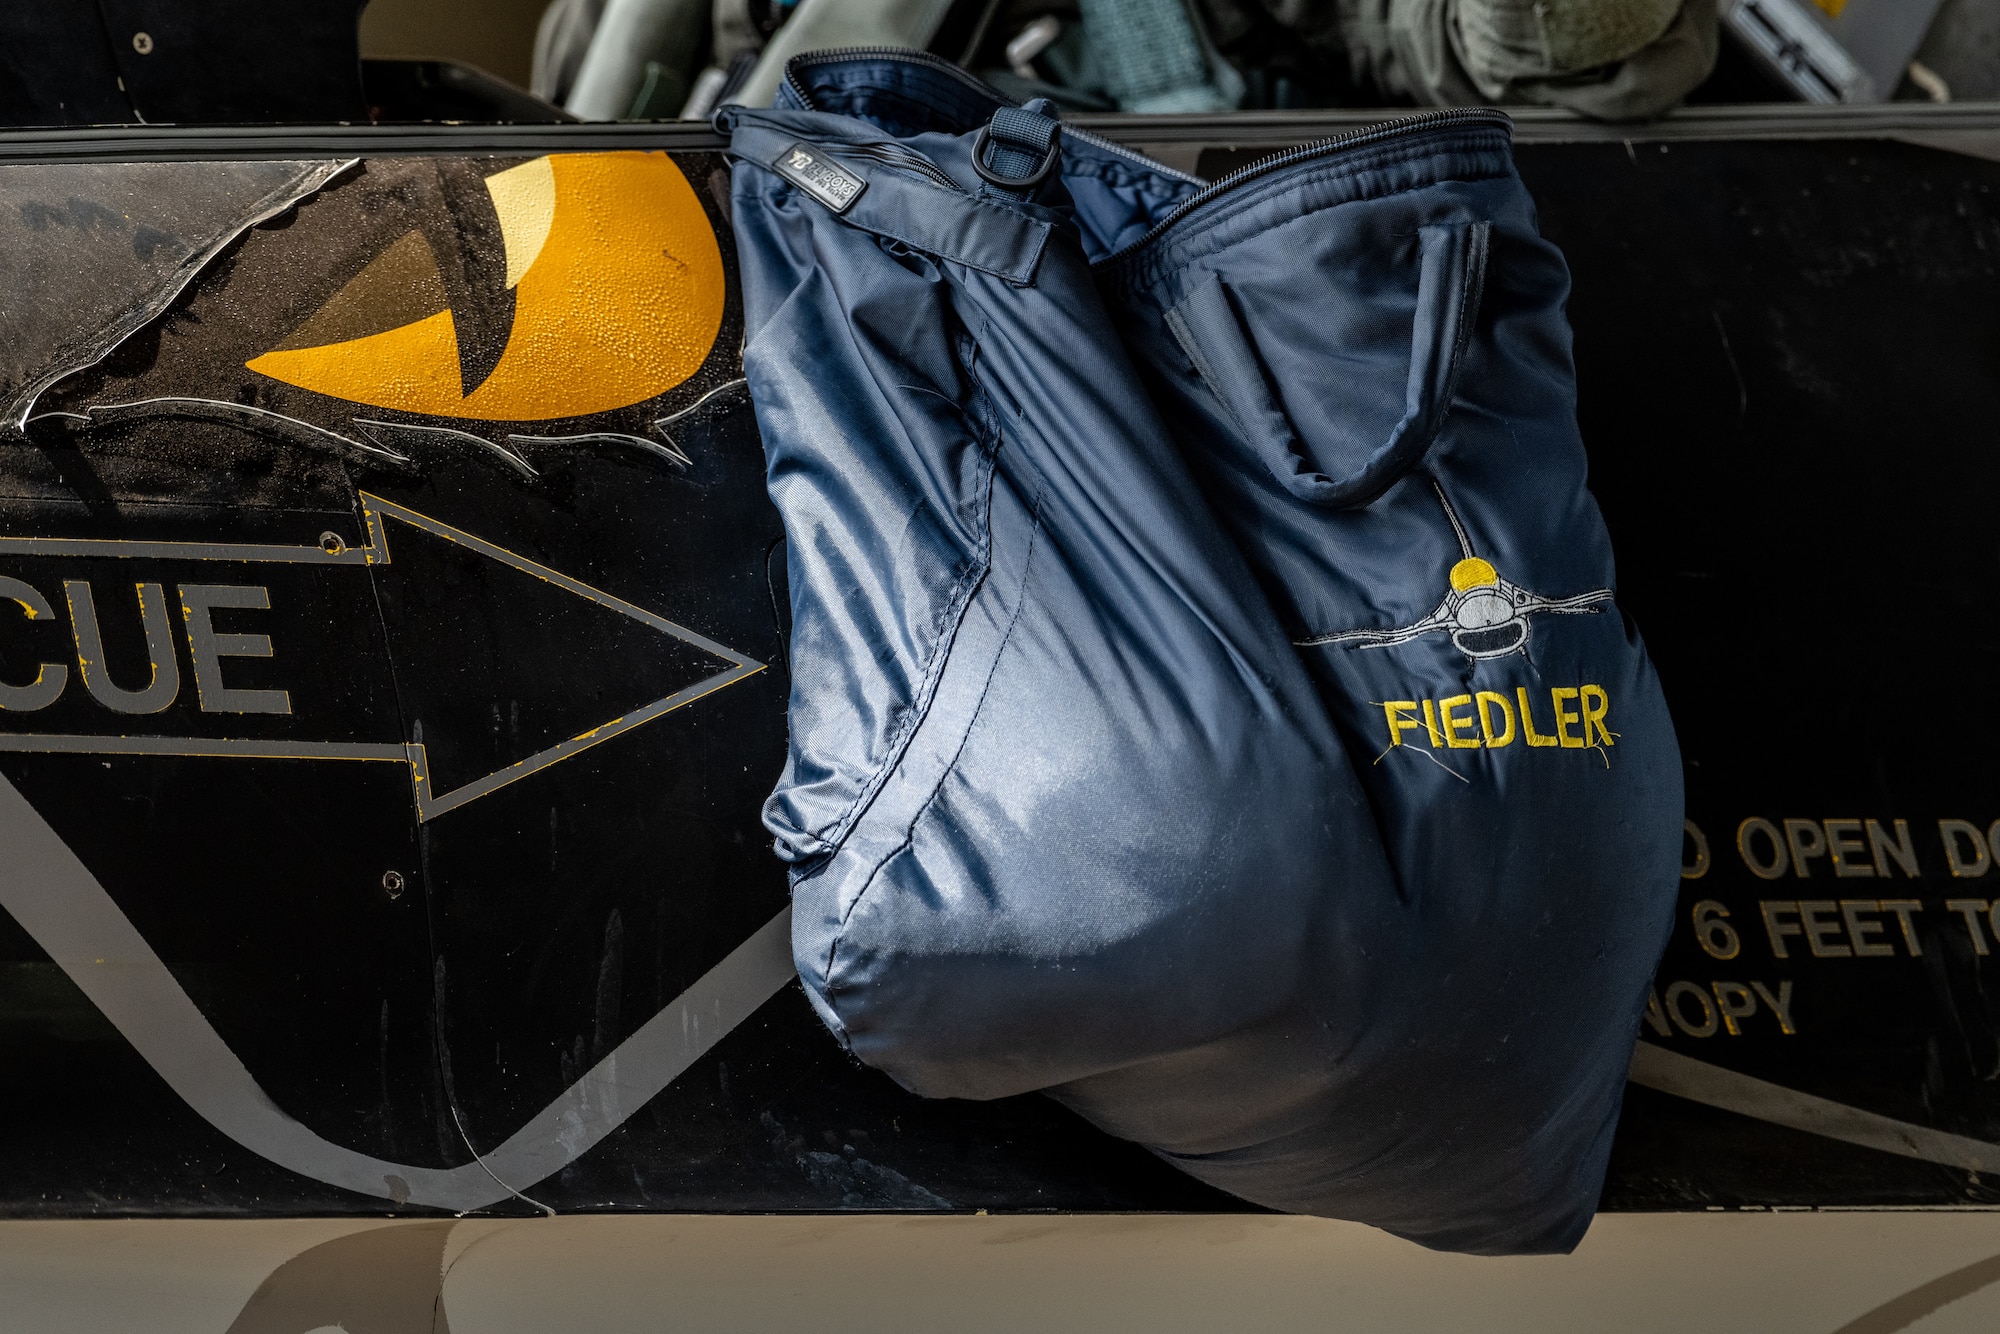 A picture of Capt Fiedler's helmet bag at Davis-Monthan Air Force Base.